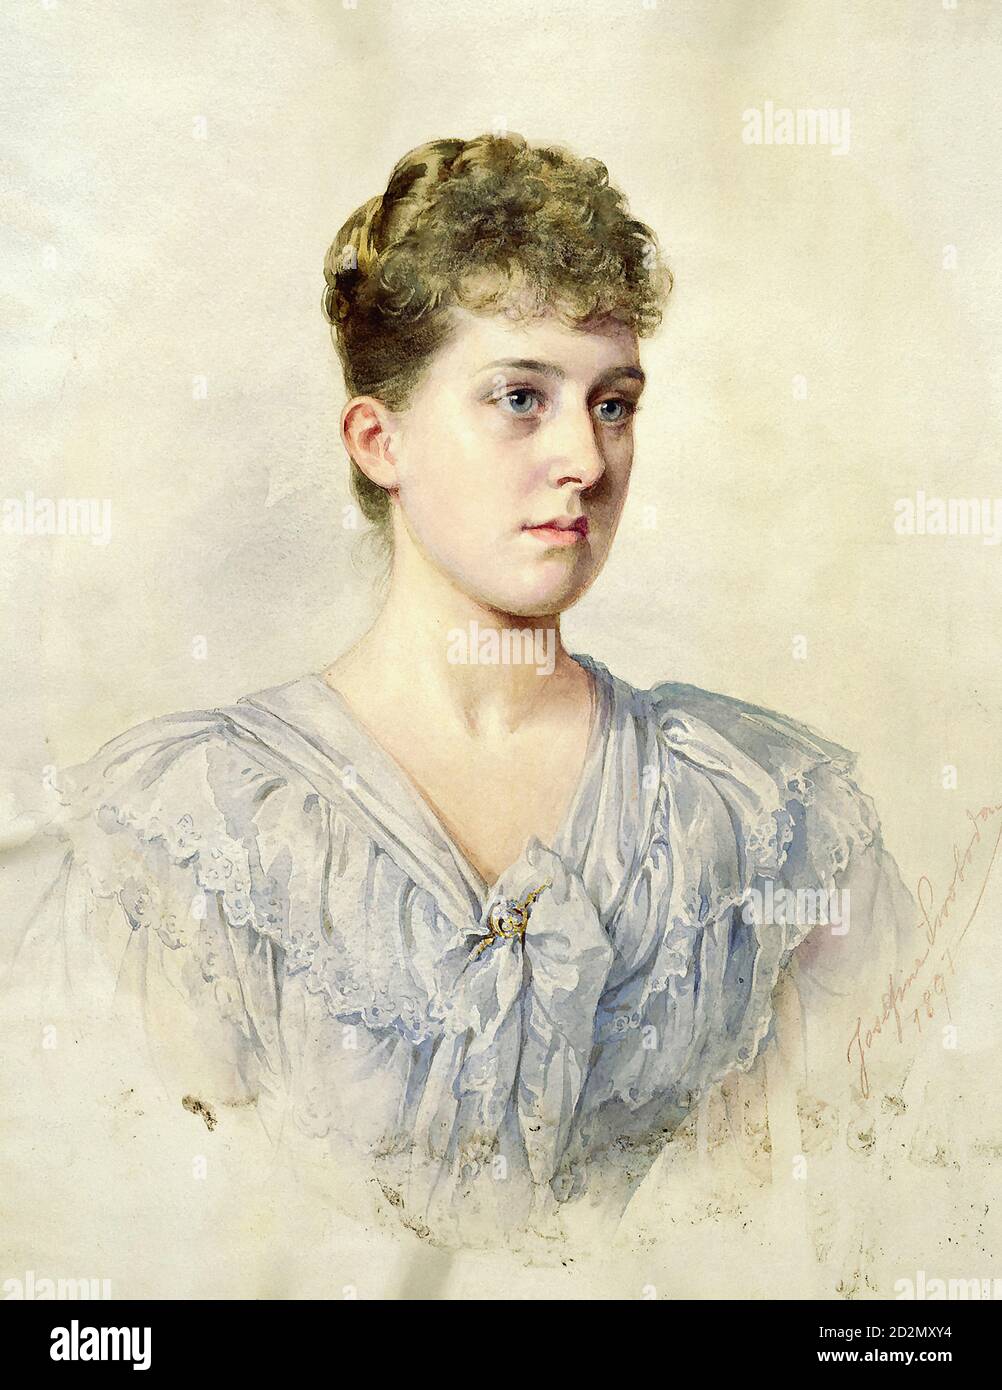 Swoboda Josefine - Princesa Marie Louise de Schleswig-Holstein - Austriaca Escuela - siglo XIX Foto de stock